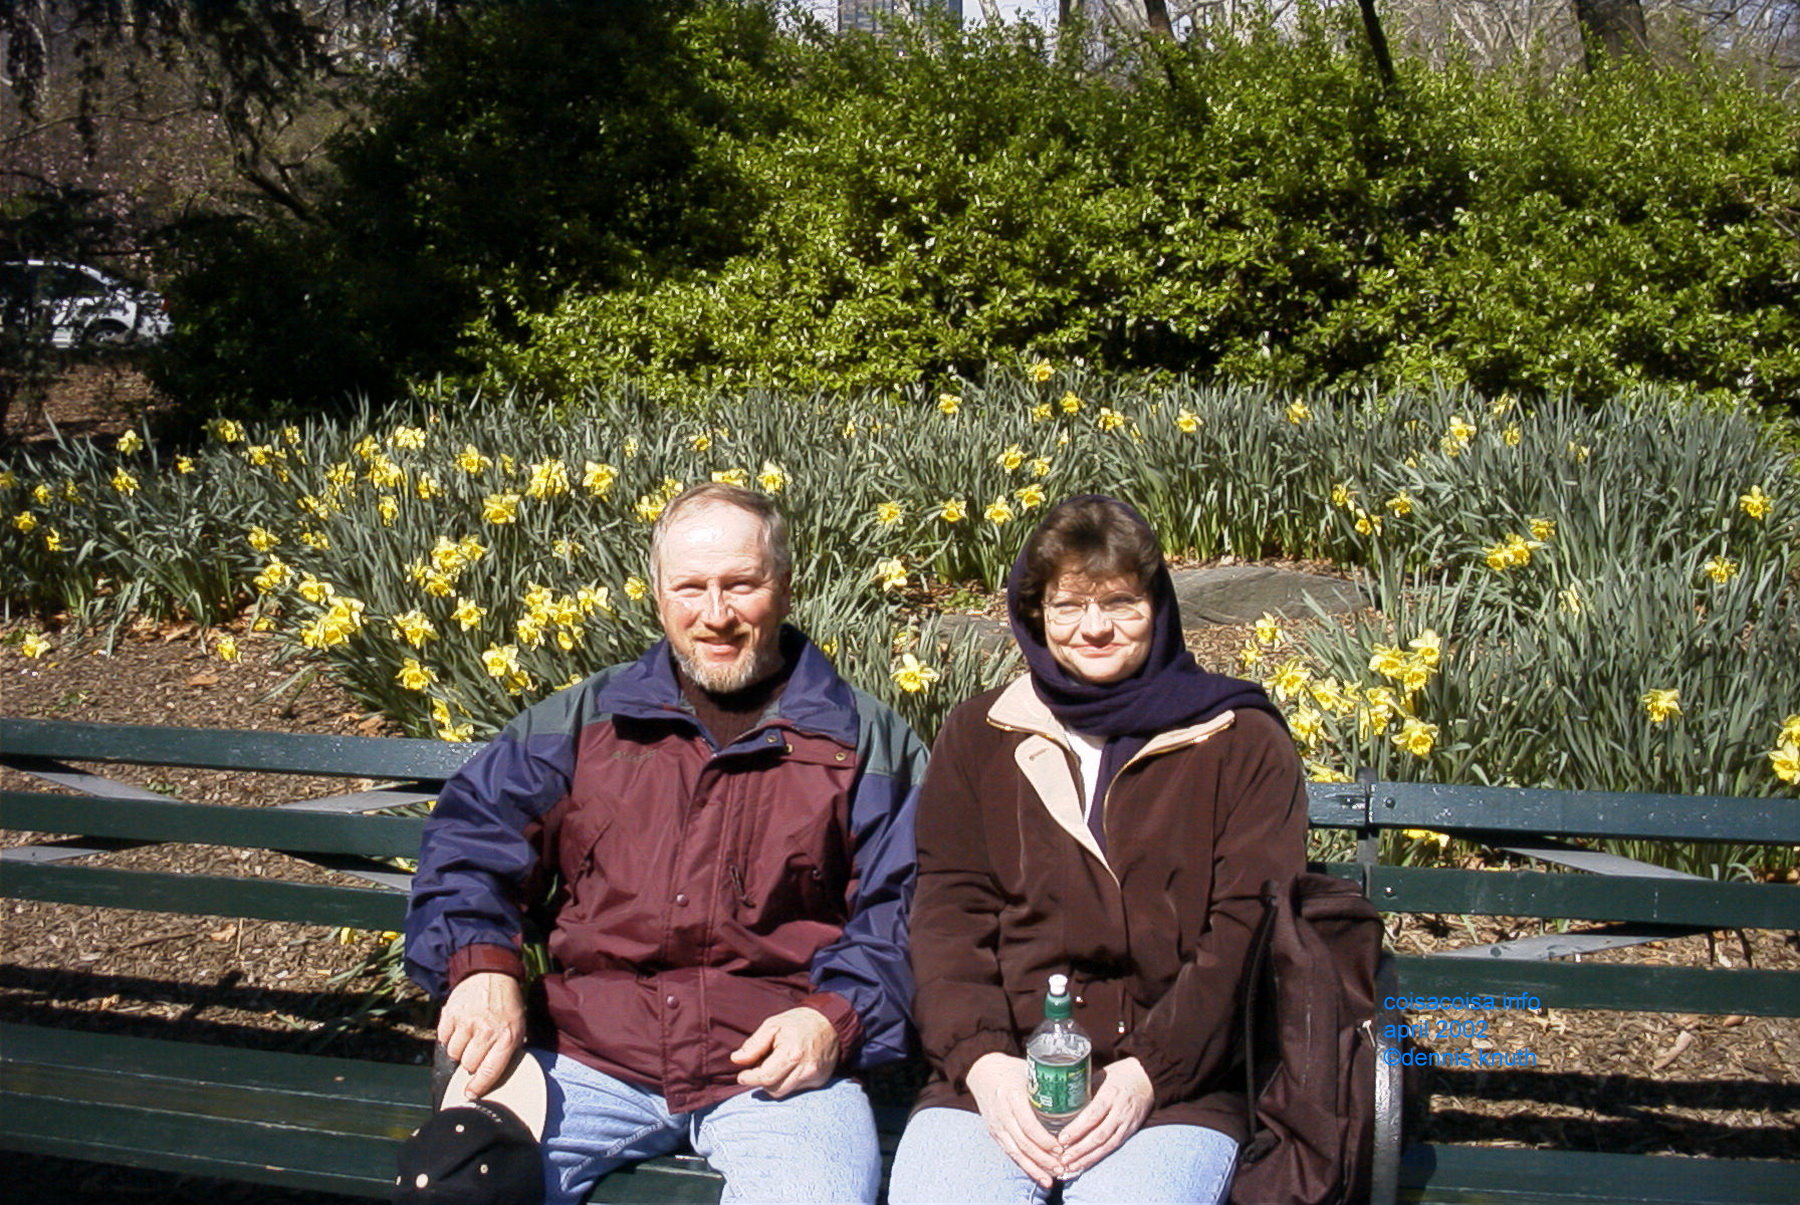 Central park at 5th Avenue springtime flowers